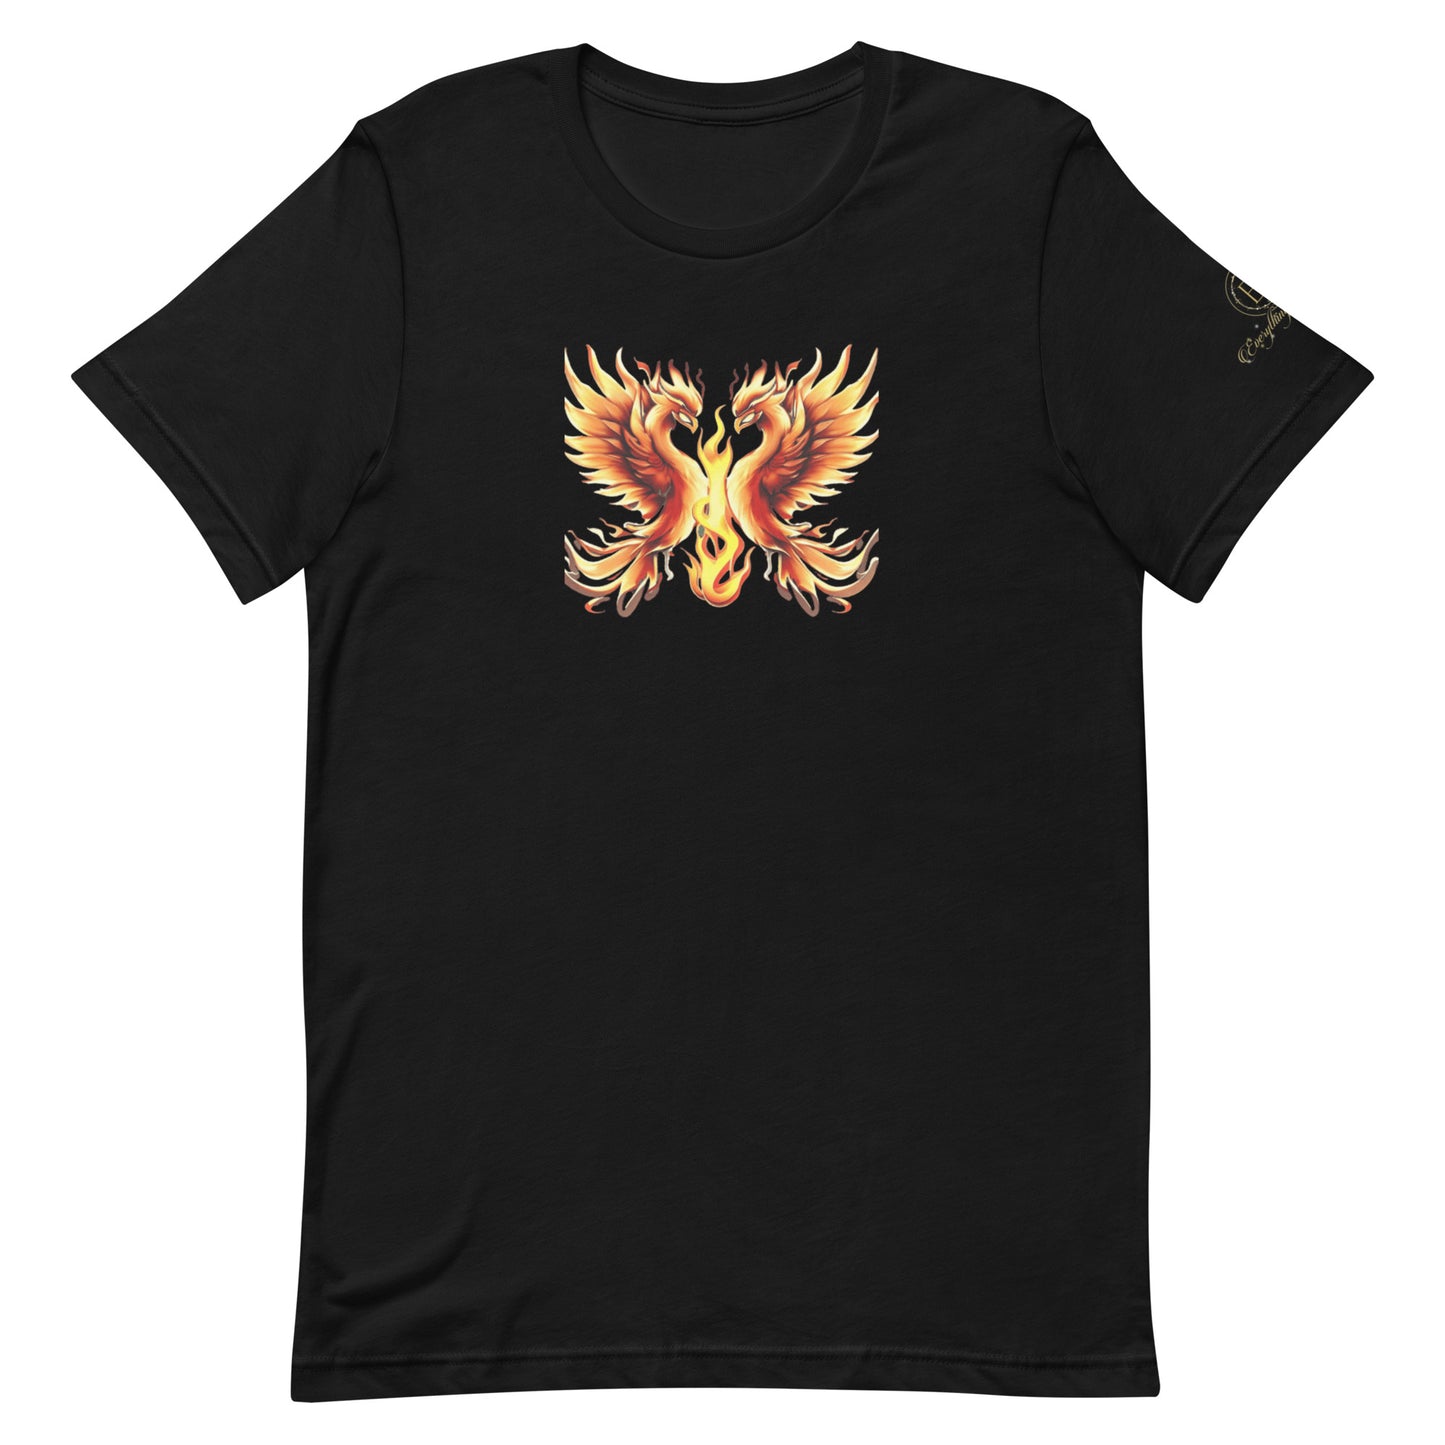 Flaming t-shirt